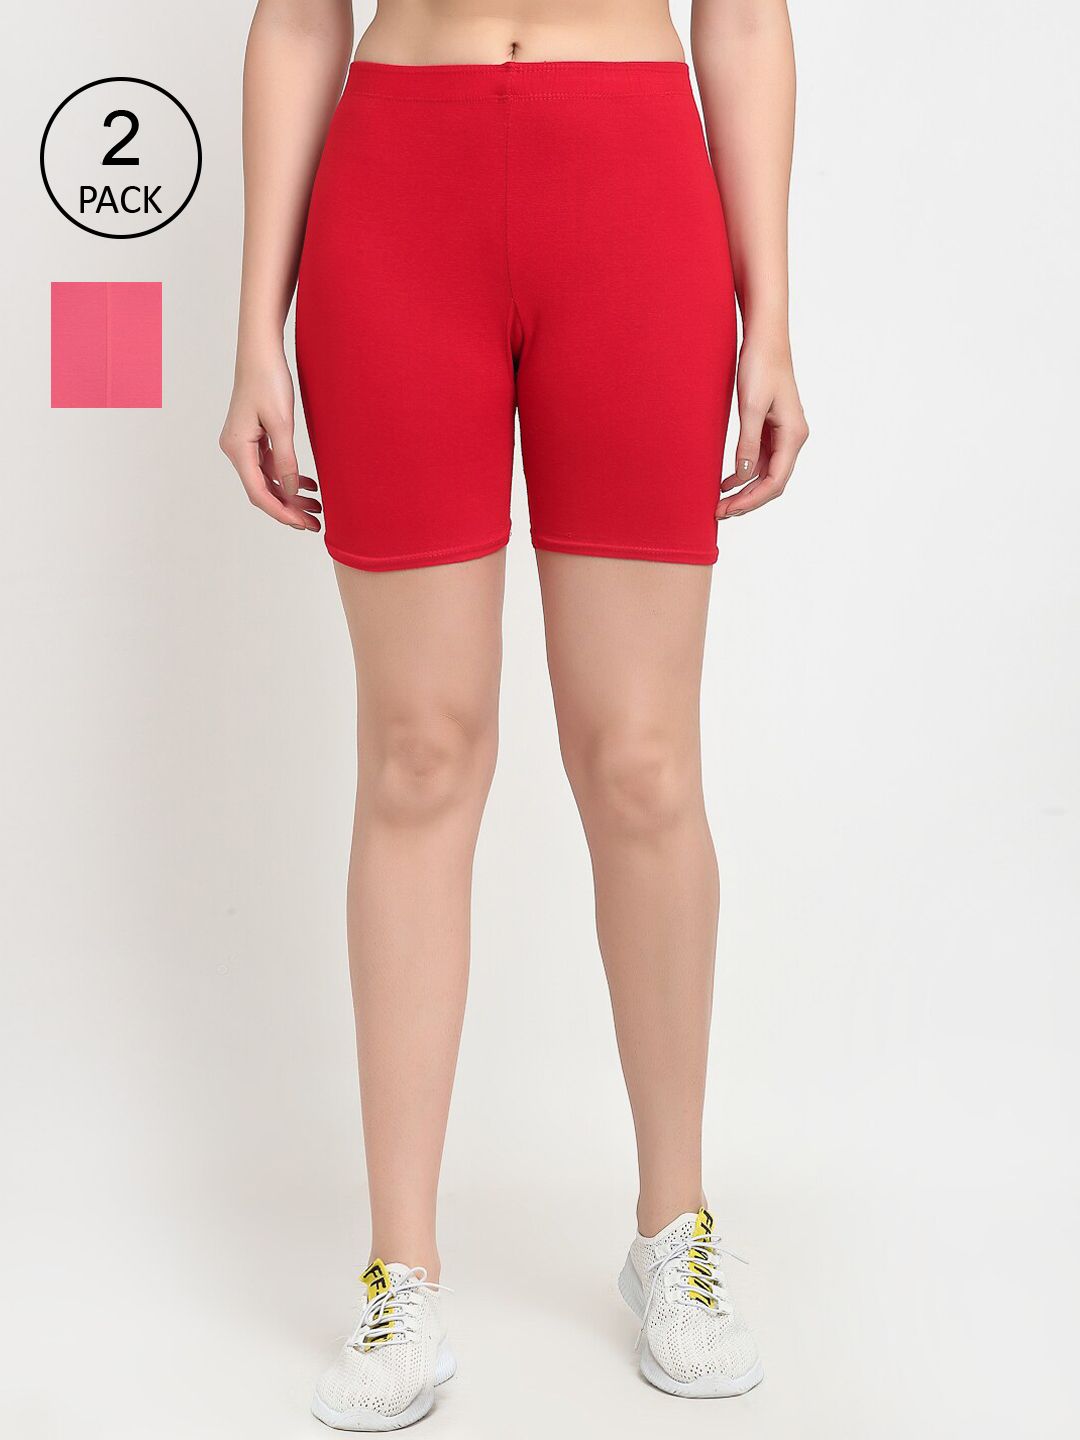 GRACIT Women Red Biker Shorts Price in India